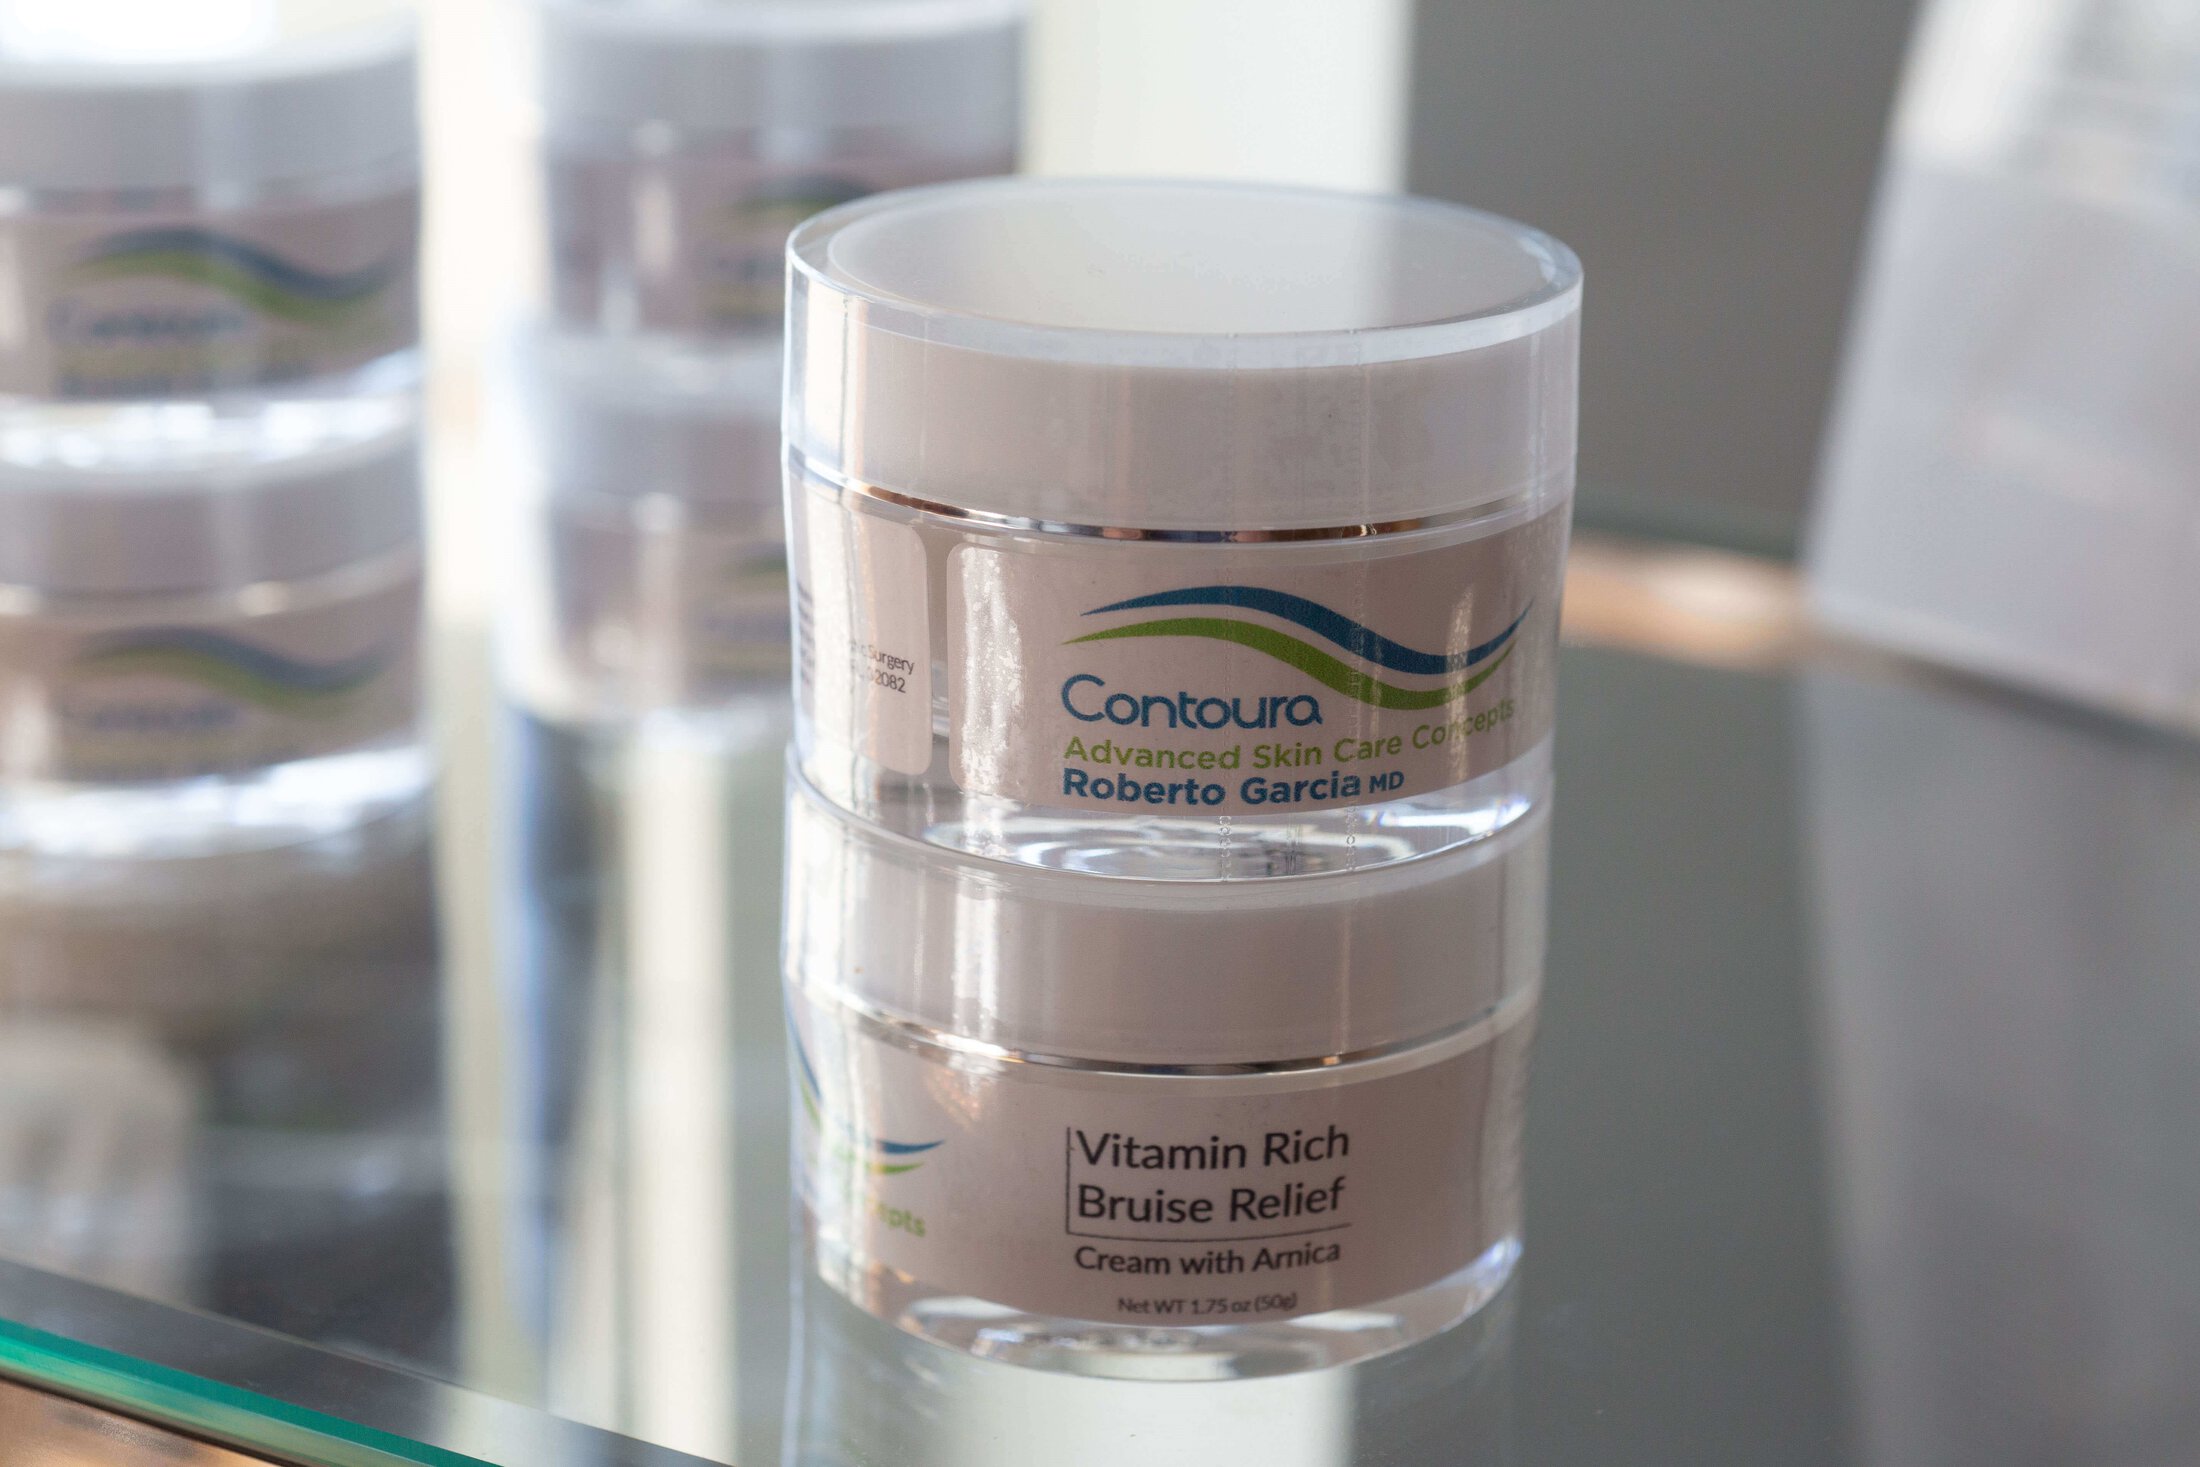 Contoura Vitamin Rich Bruise Cream with Arnica product